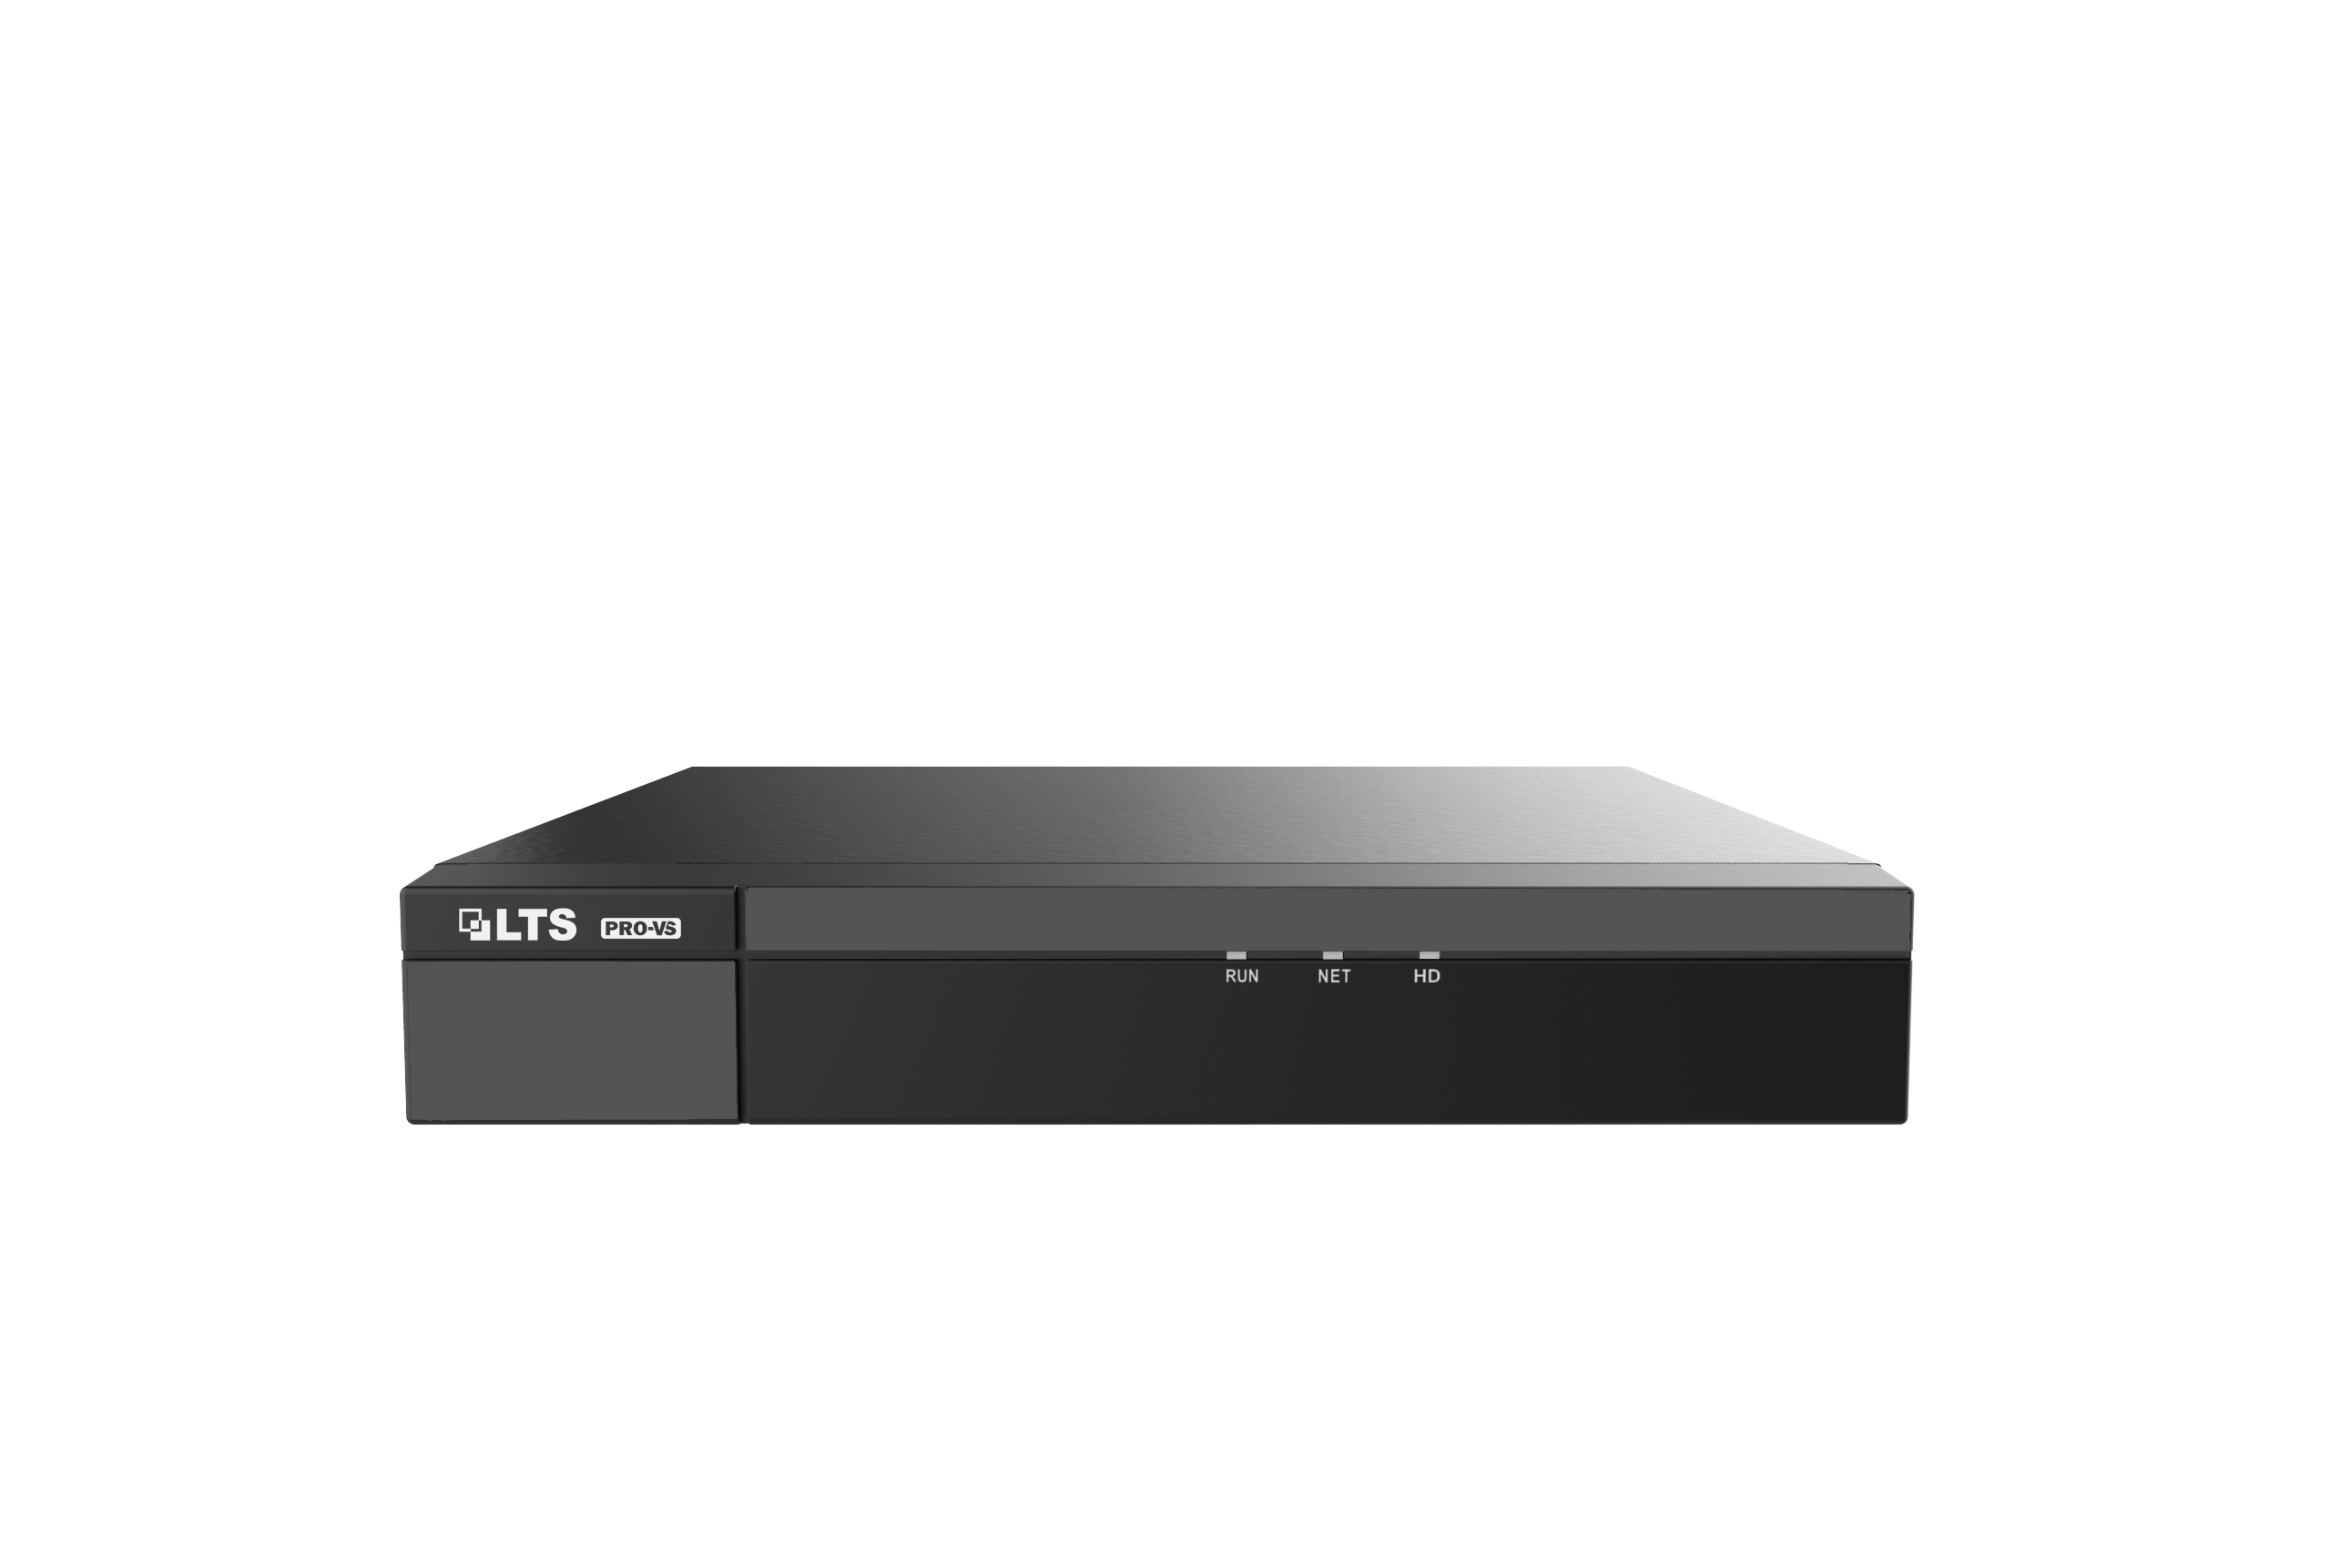 Platinum Professional Level 4 Channel NVR 1U SATA up to 6TB 2TB Pre-Installed Storage LTS LTN8704Q-P4-2TB 4 PoE Ports 